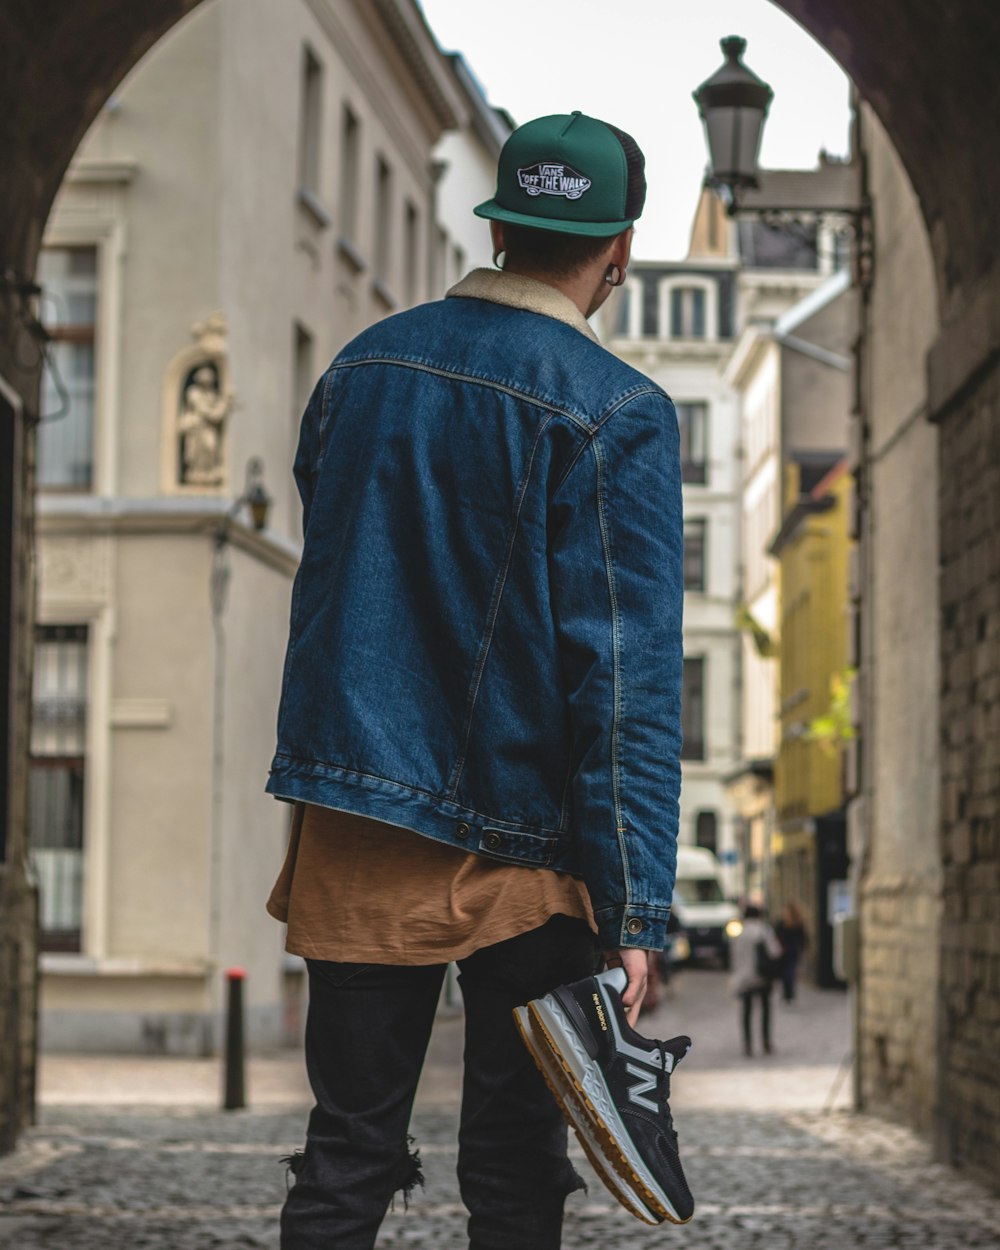 man holding New Balance sneakers photo – Free Antwerp Image on Unsplash